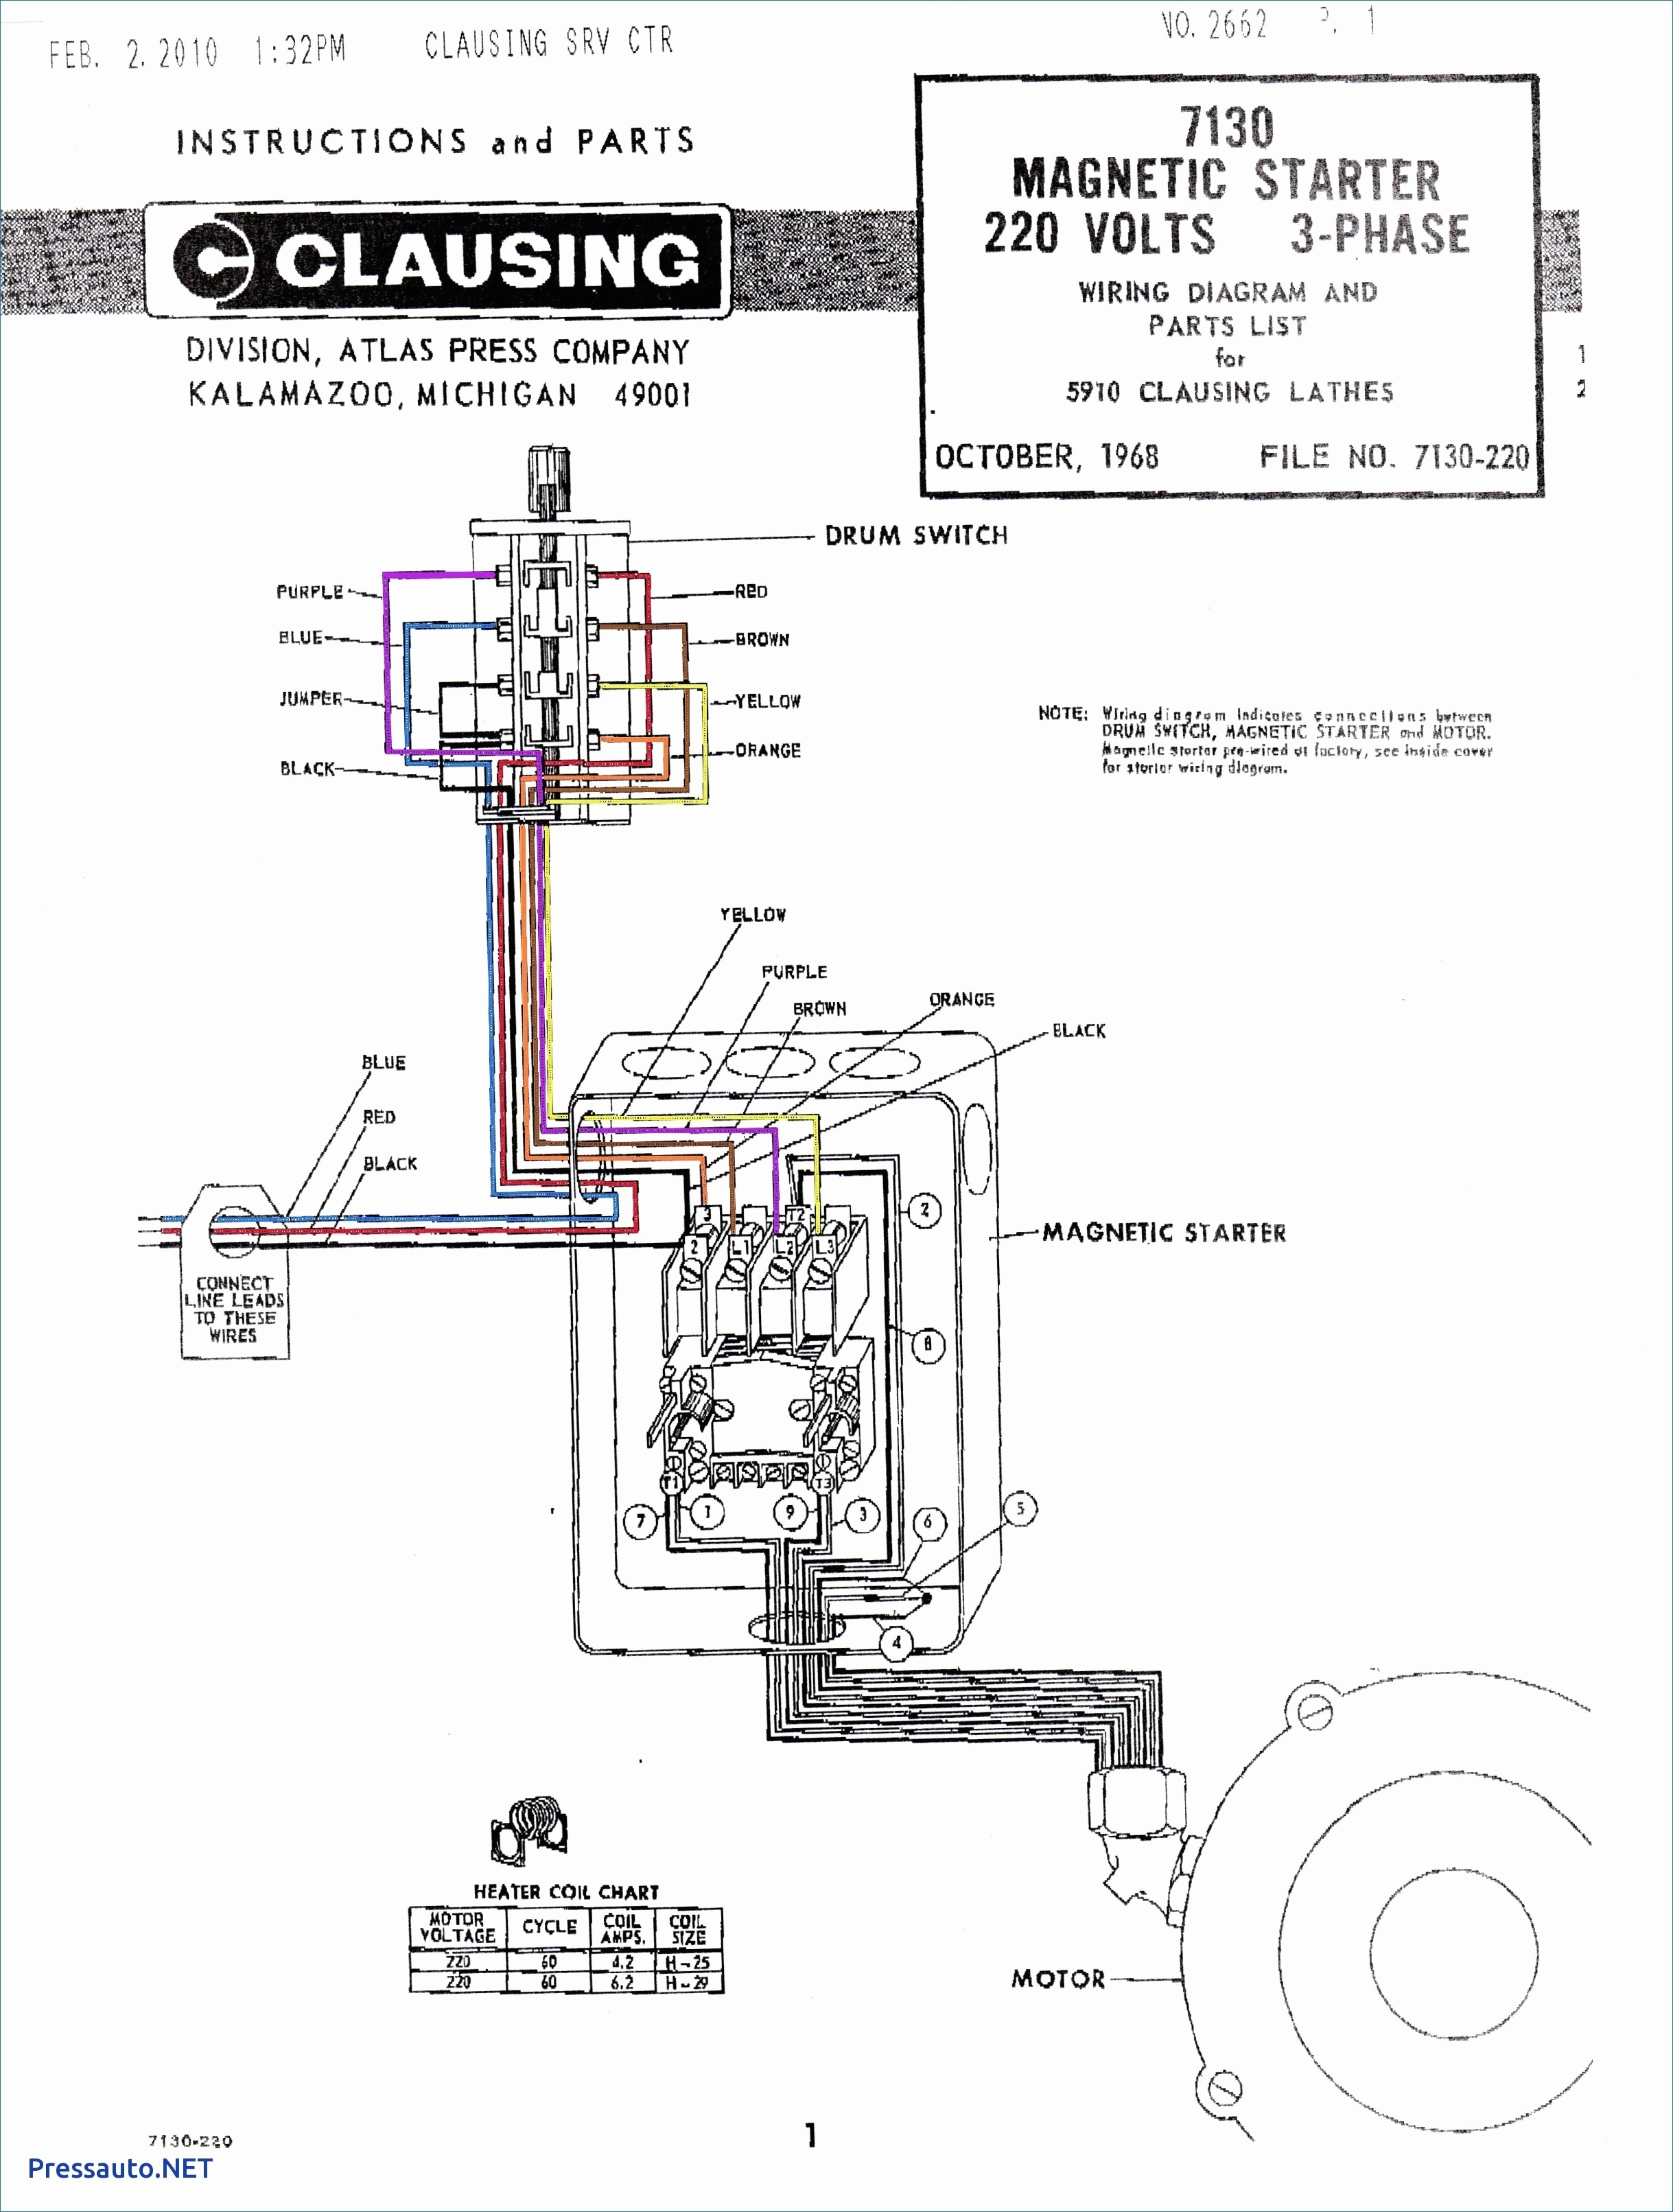 Trombetta Solenoid 12V Wiring Diagram | Wiring Library - Trombetta Solenoid Wiring Diagram